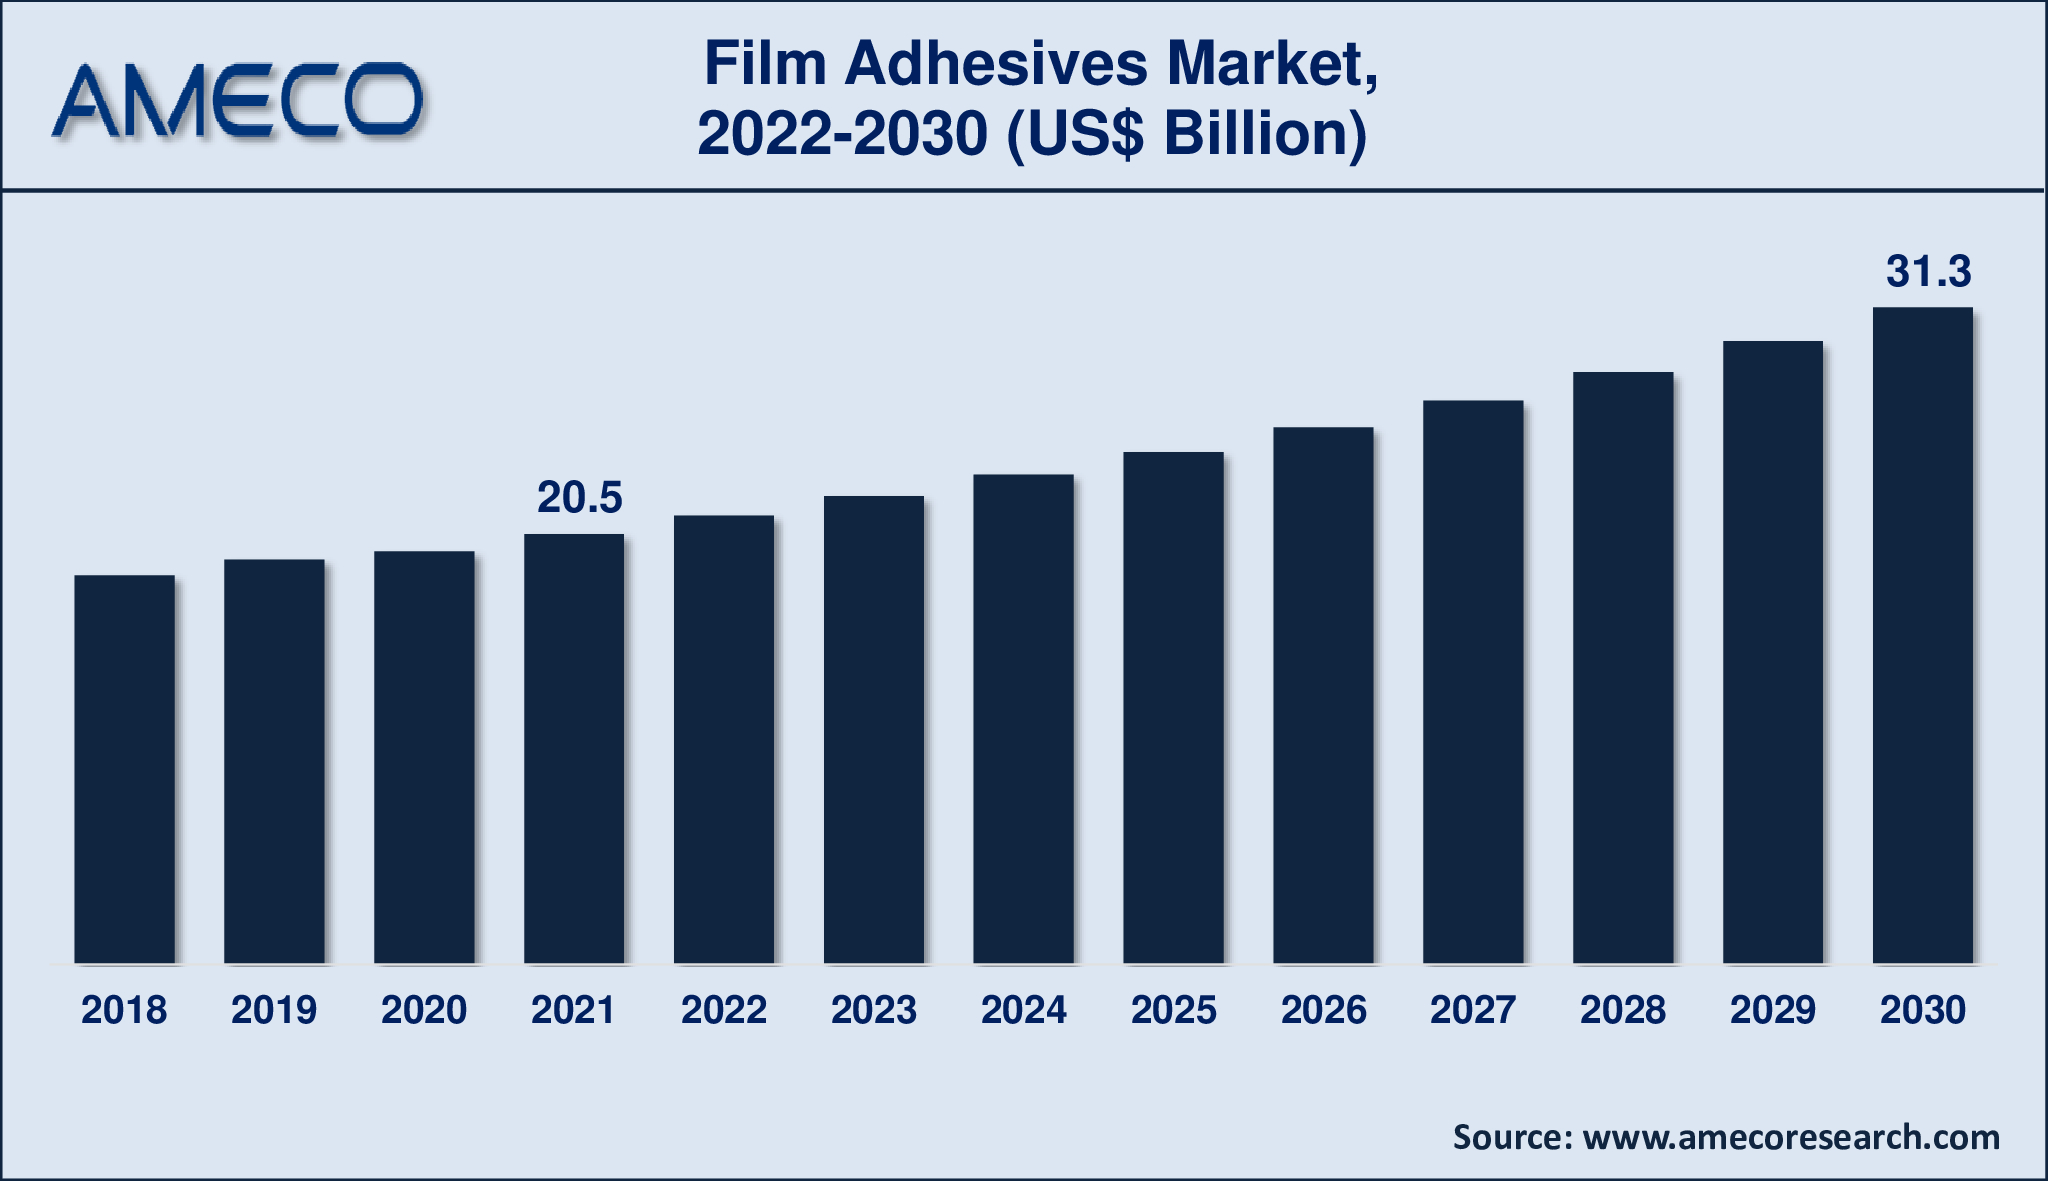 Film Adhesives Market Dynamics